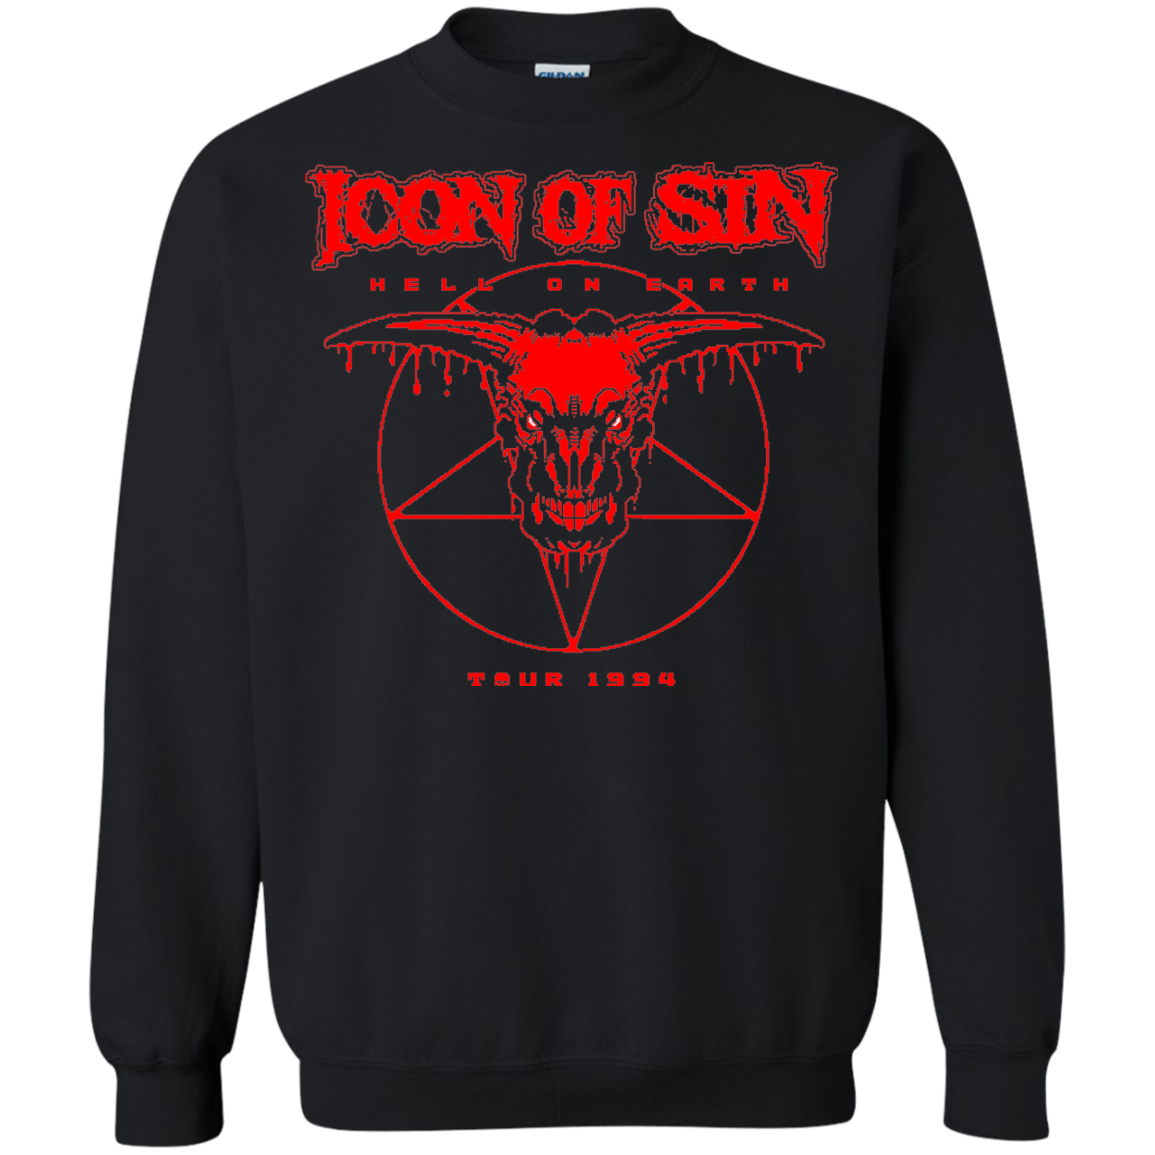 Sweatshirts Black / Small Icon of Sin Crewneck Sweatshirt